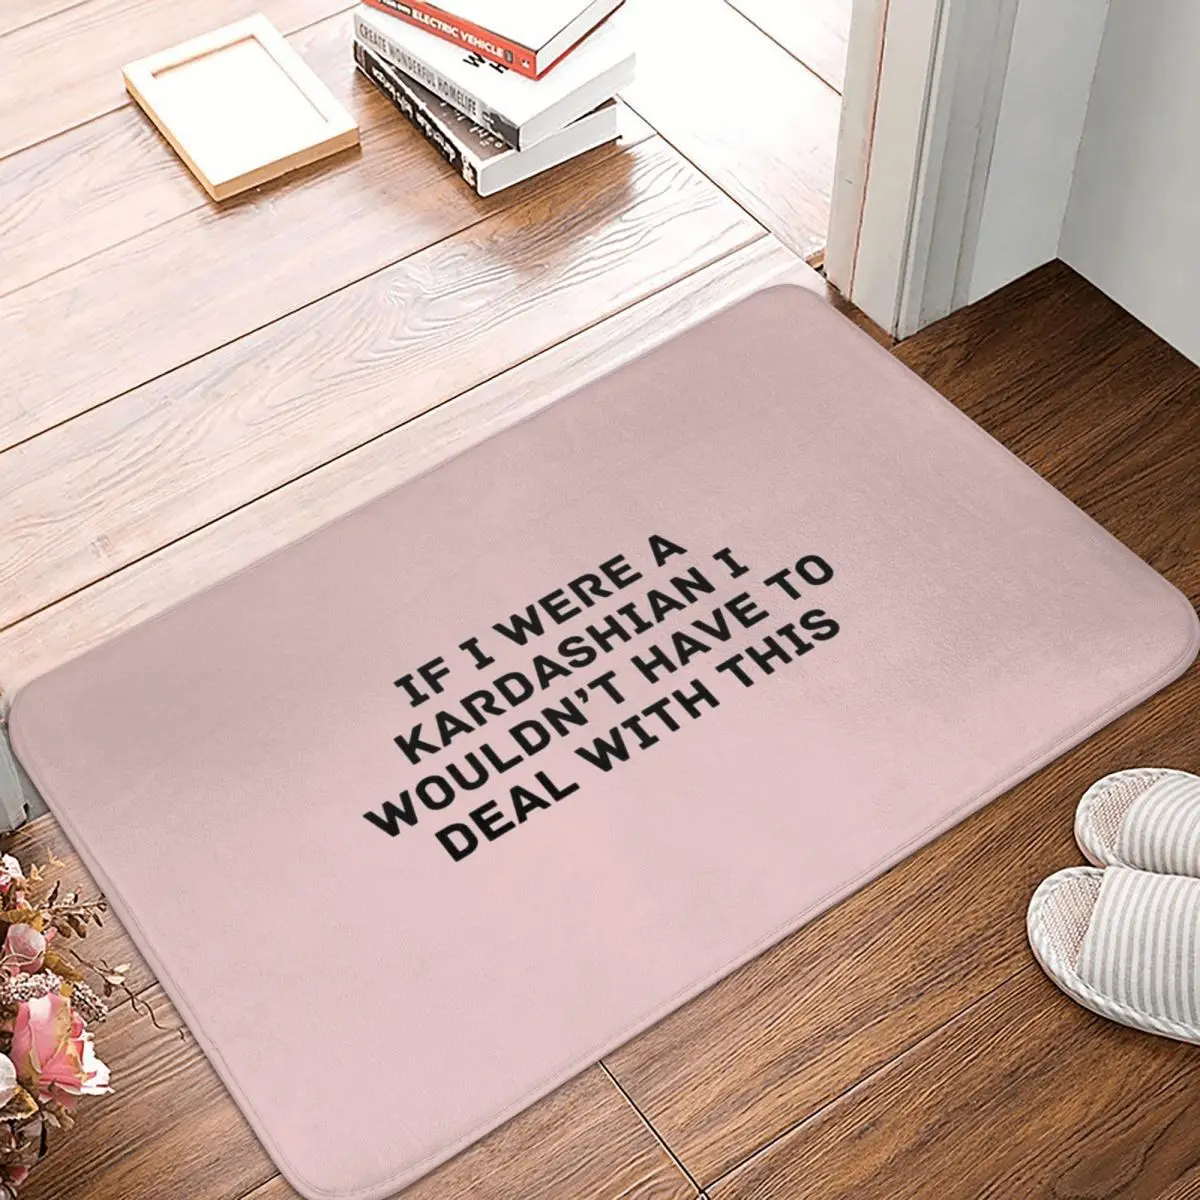 

If I Were A K Doormat Carpet Mat Rug Polyester PVC Anti-slip Floor Decor Bath Bathroom Kitchen Balcony 40x60